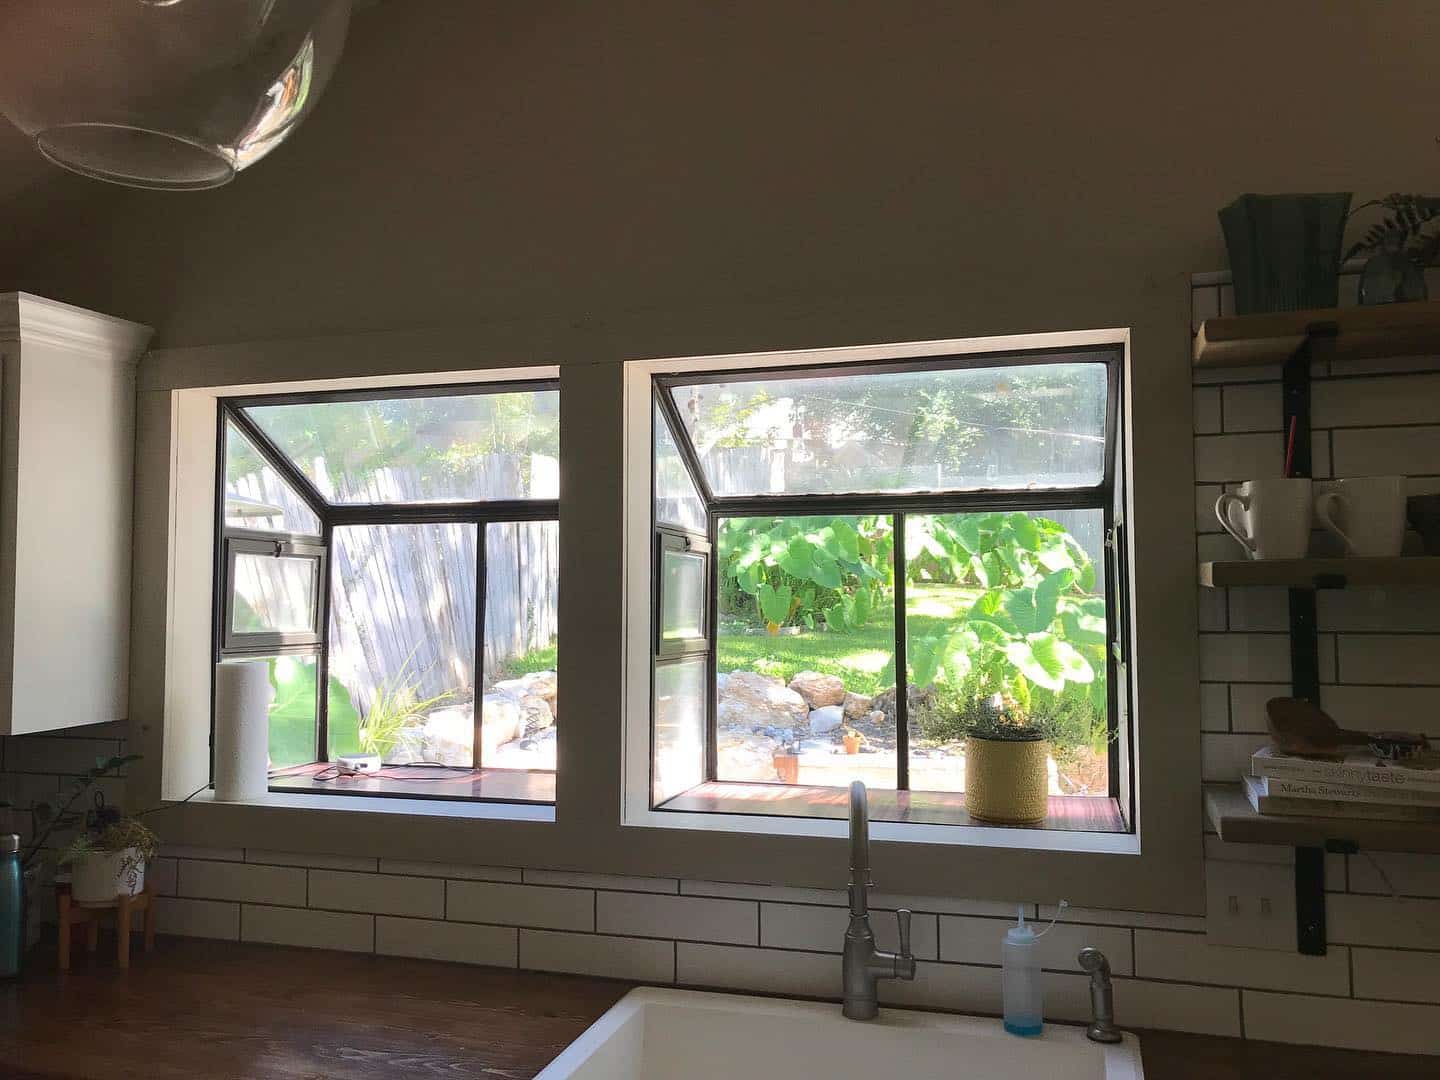 Spacious kitchen windows providing a view of a green garden before renovation in San Antonio.